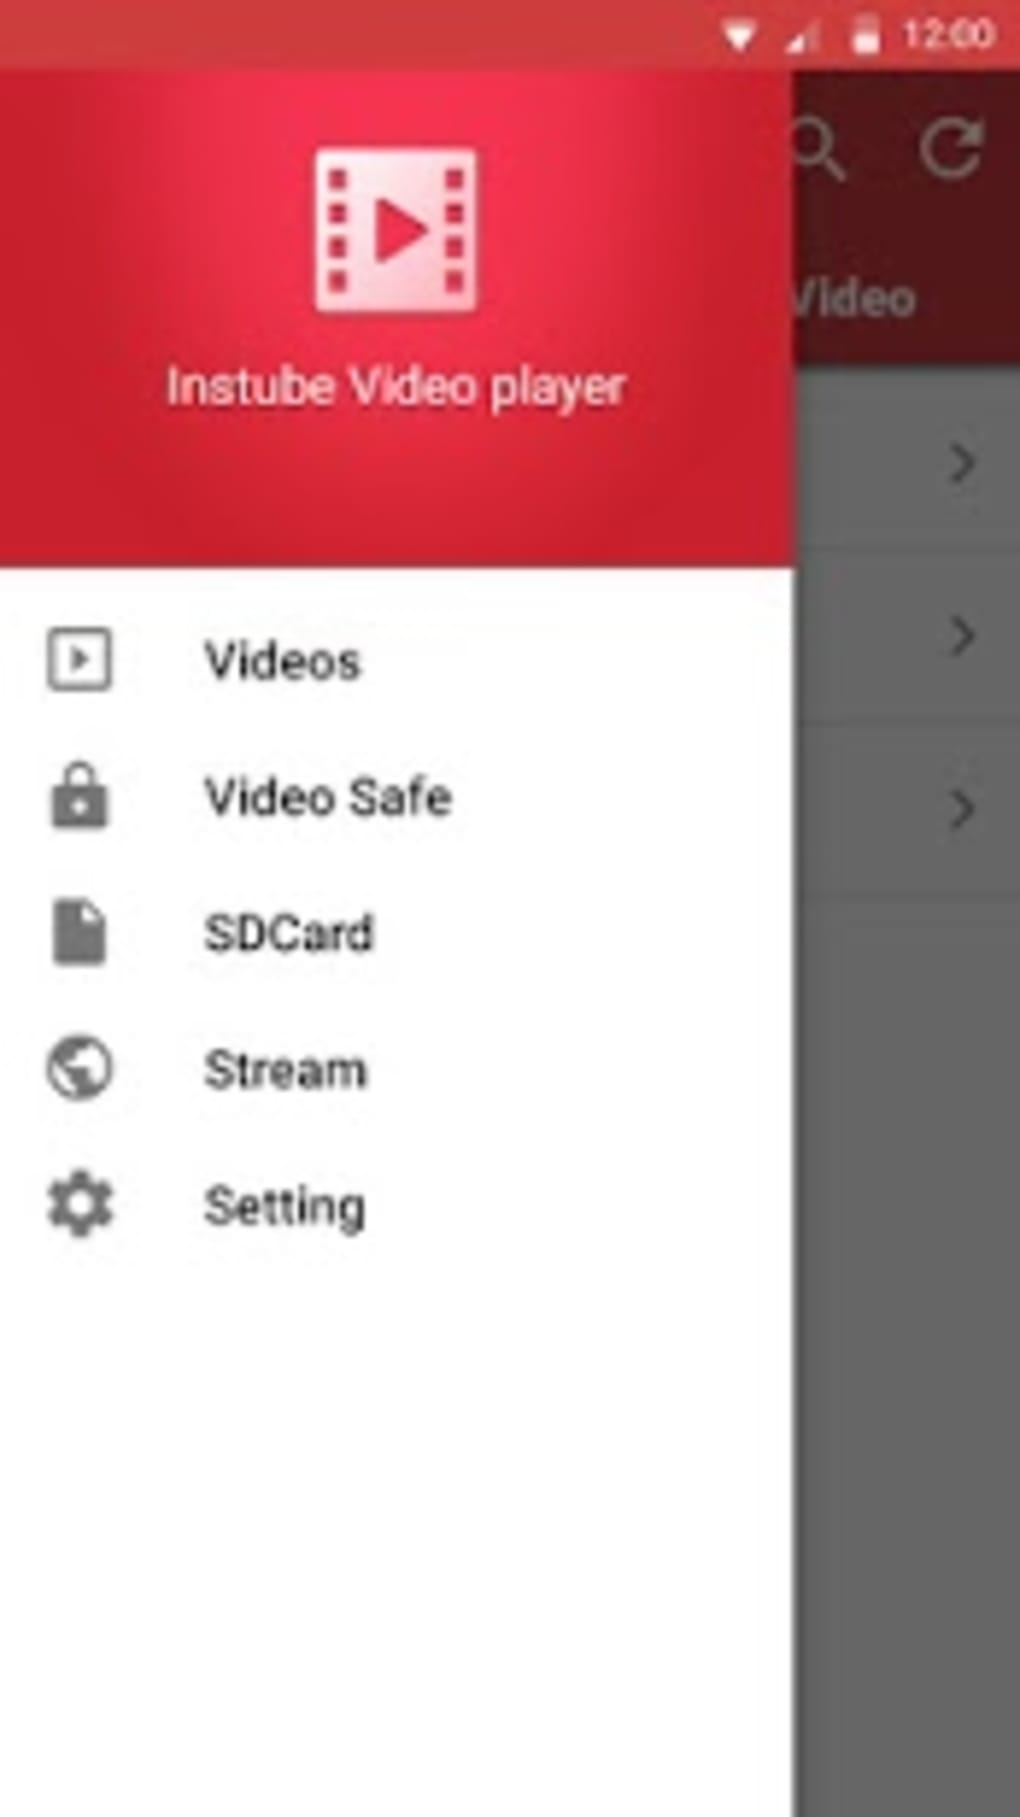 4K Video Download App - Download 4K Video with InsTube